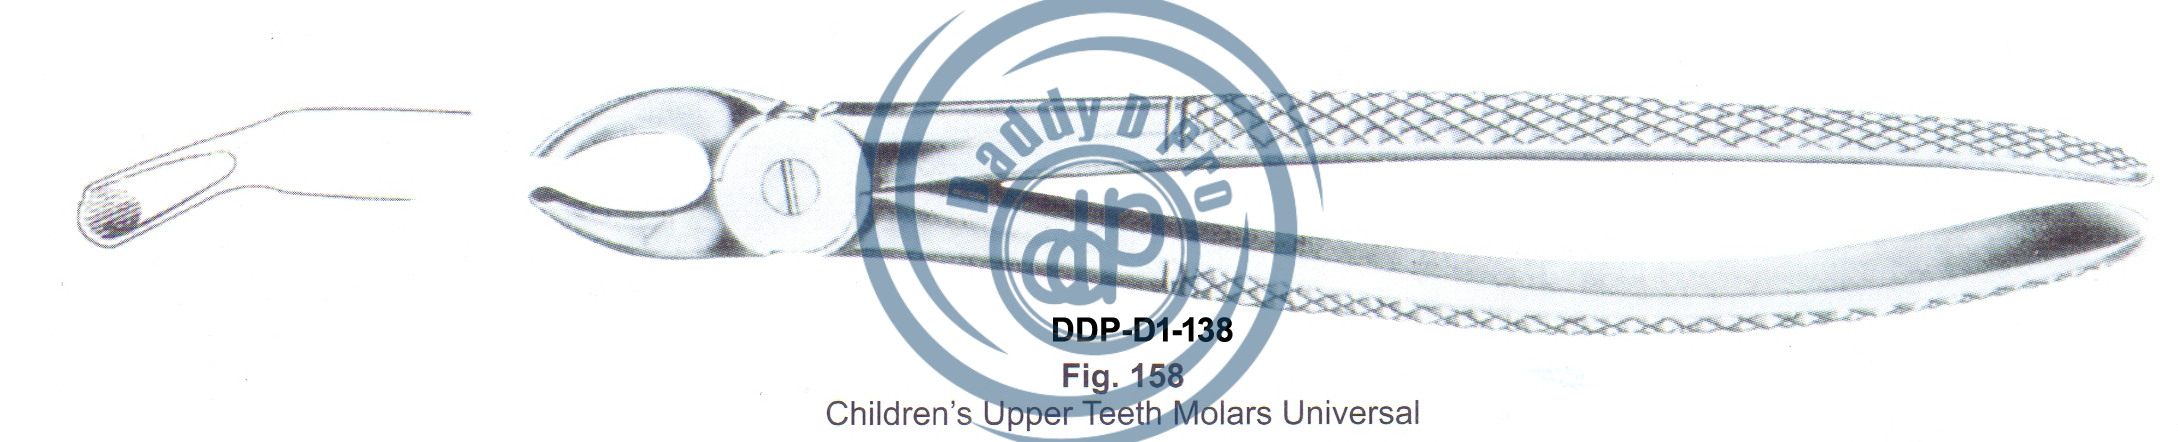 images/DDP-D1-138.png